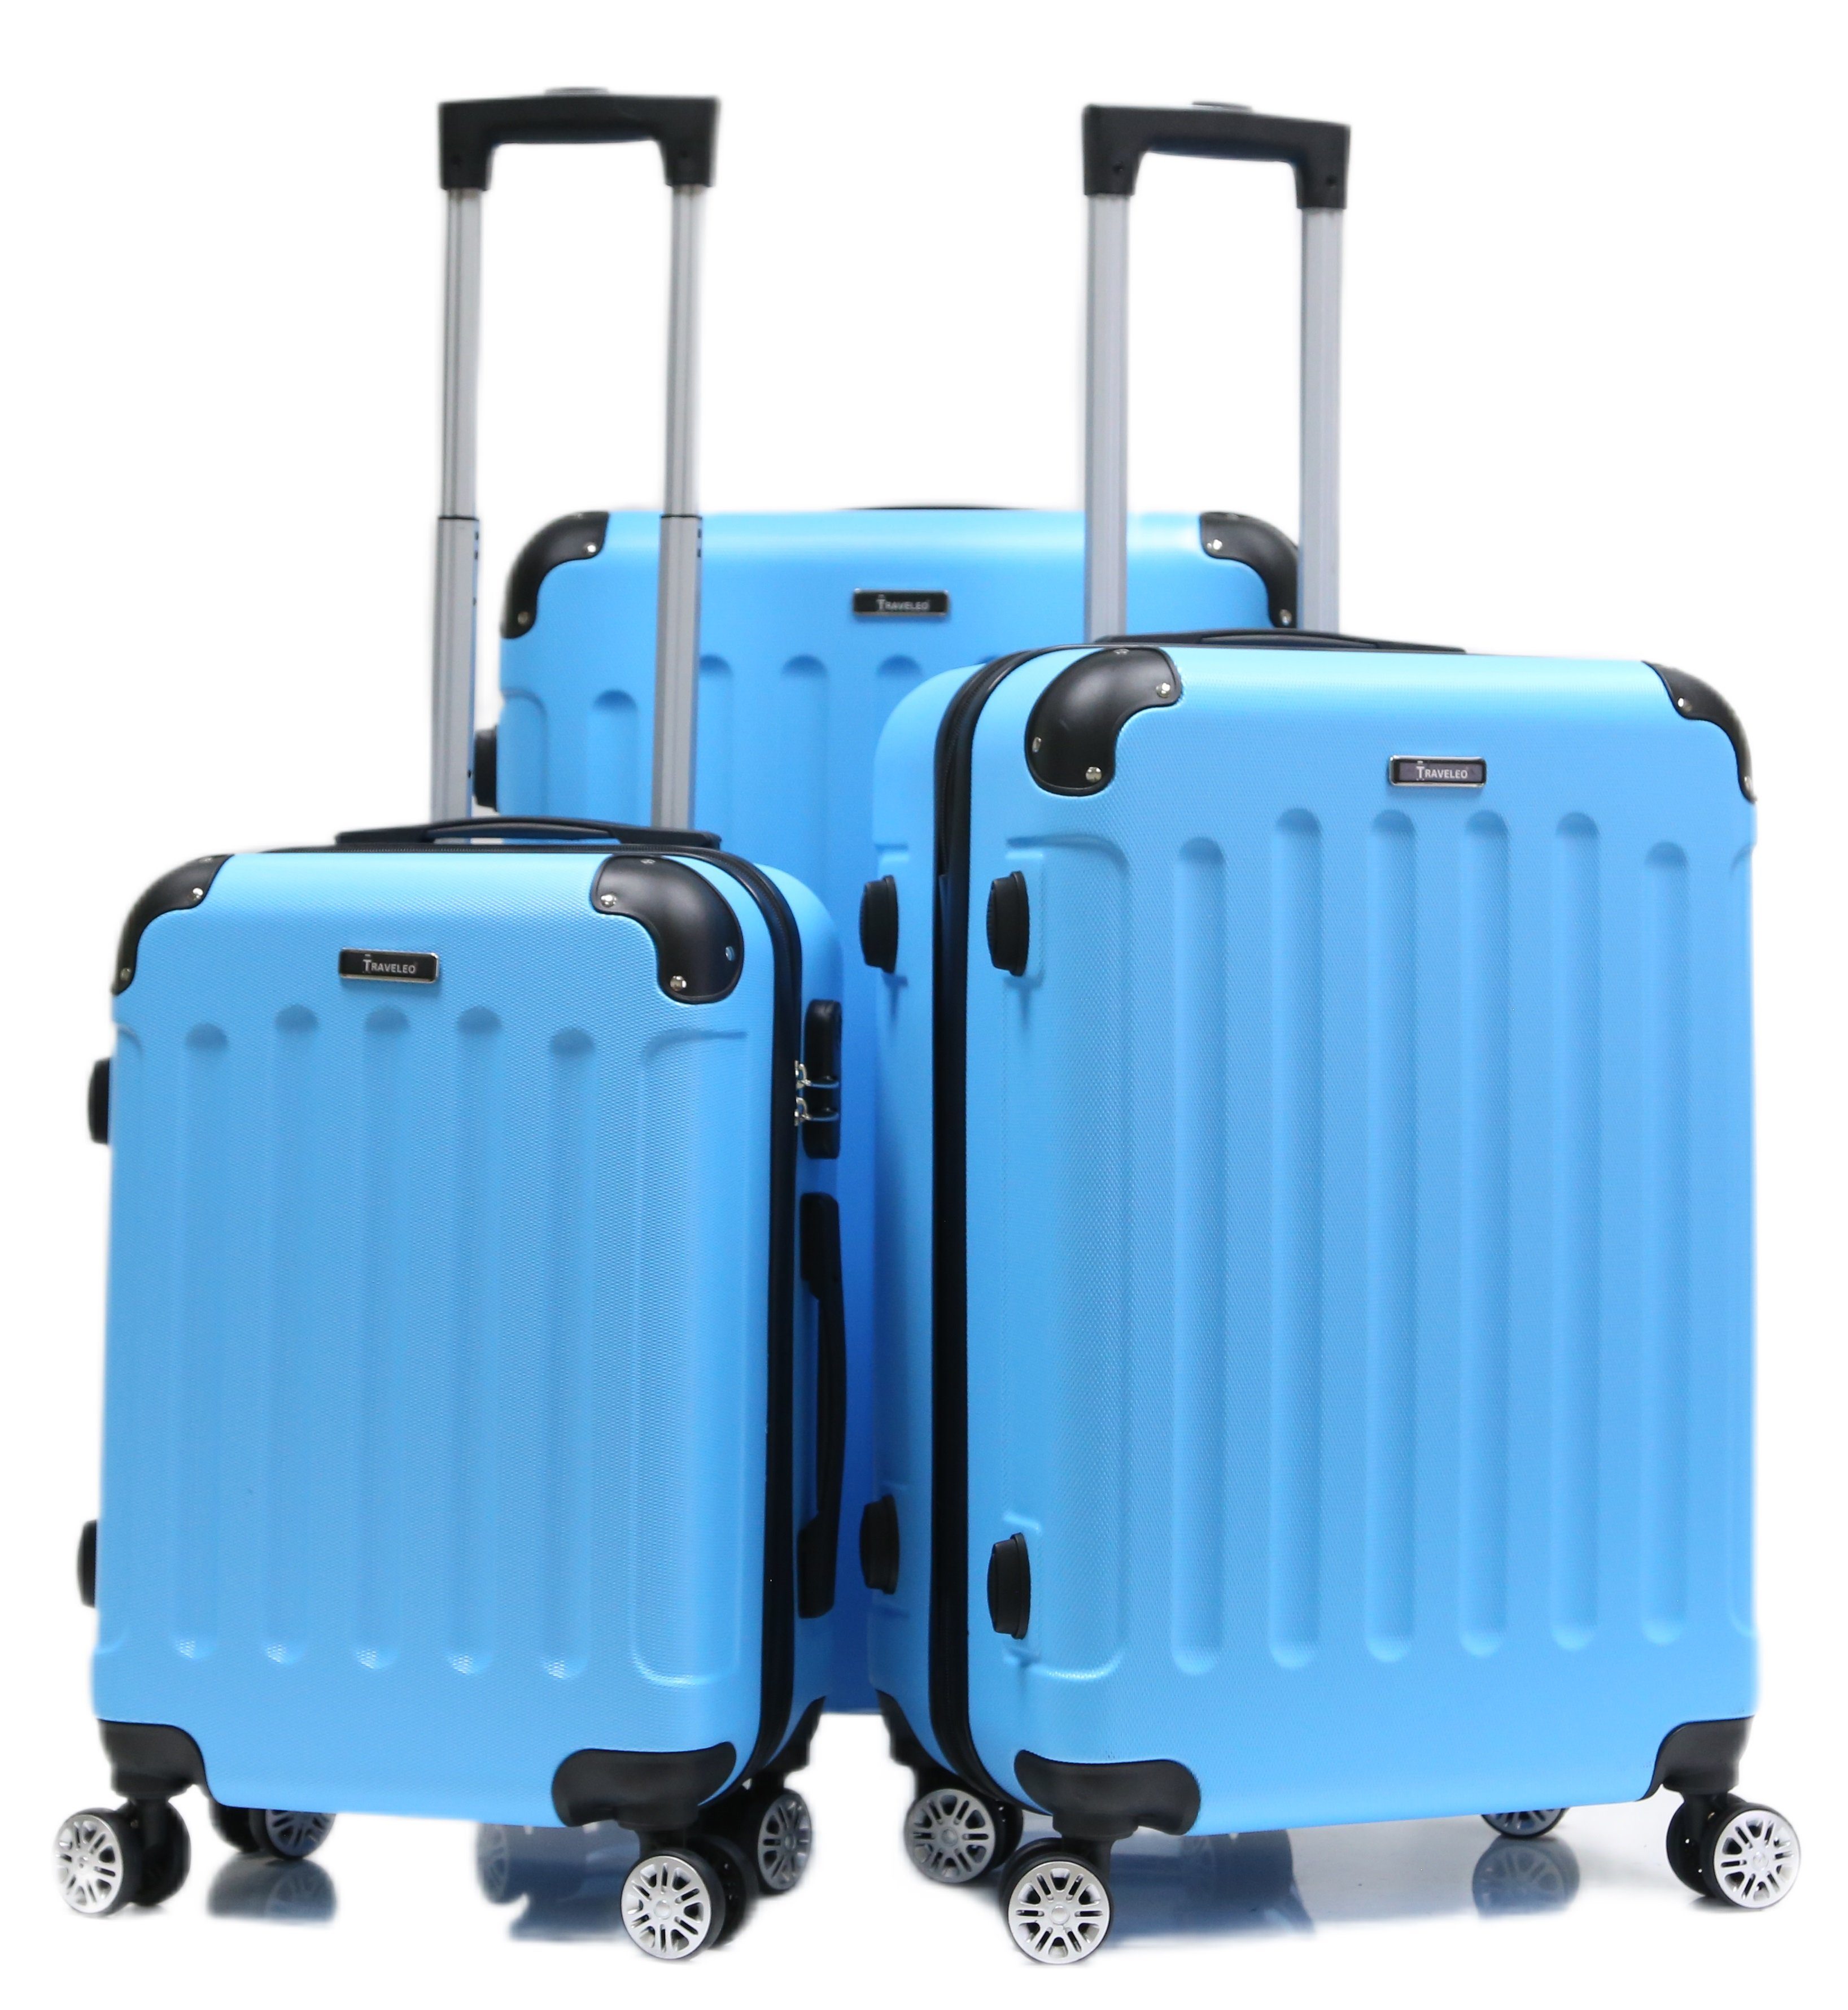 Cheffinger Kofferset Reisekoffer Koffer 3 Skyblue Trolley Set (3 Handgepäck, Hartschale tlg) Kofferset tlg